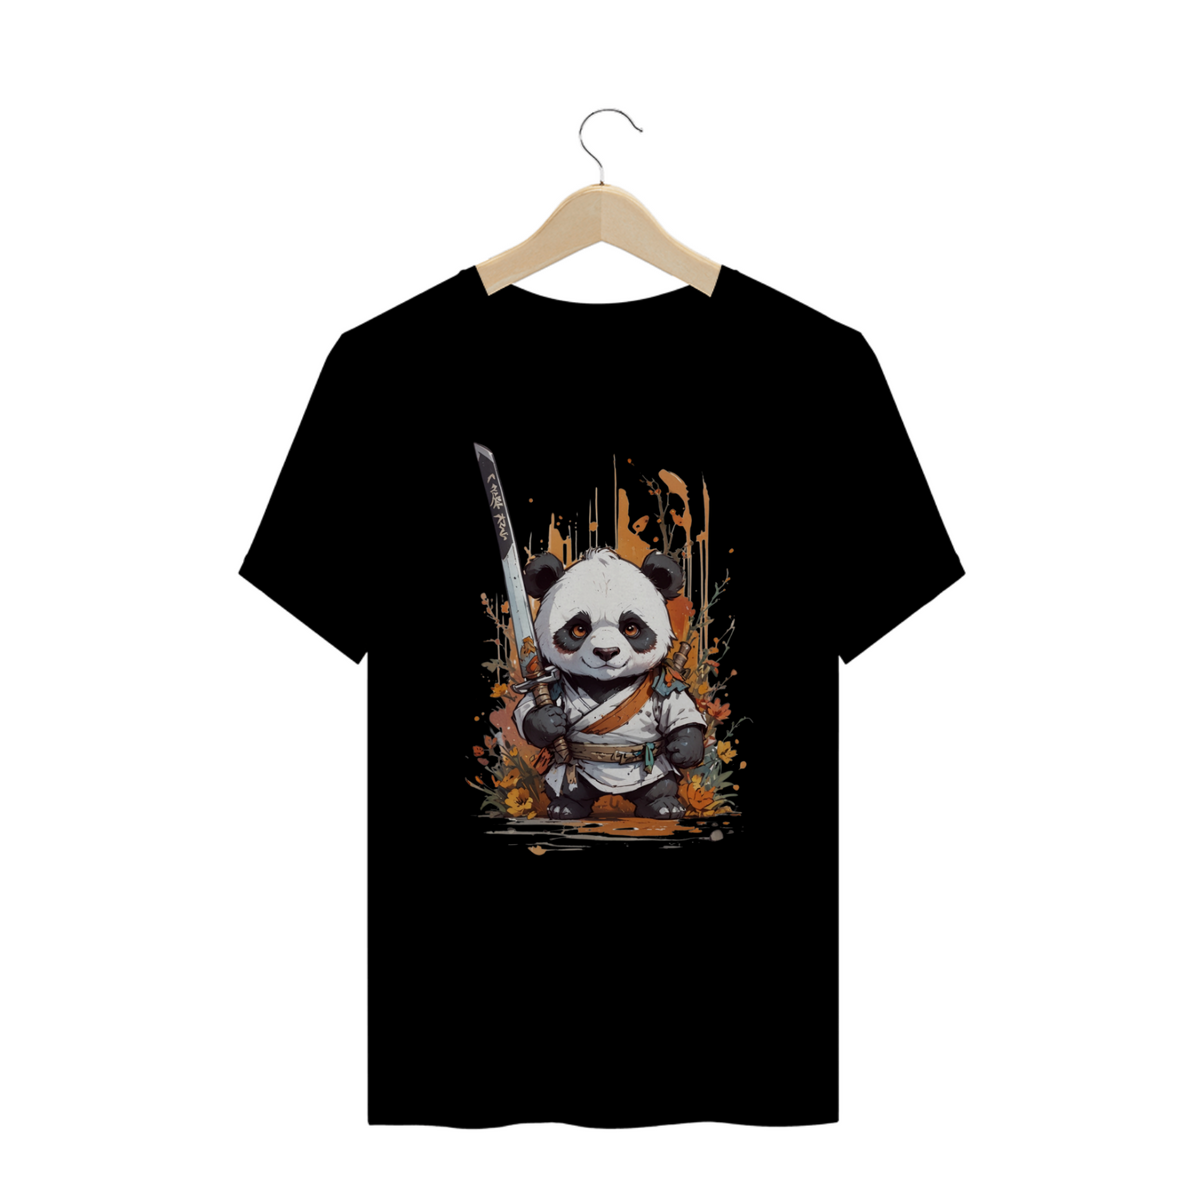 Nome do produto: Warrior Panda - Plus Size